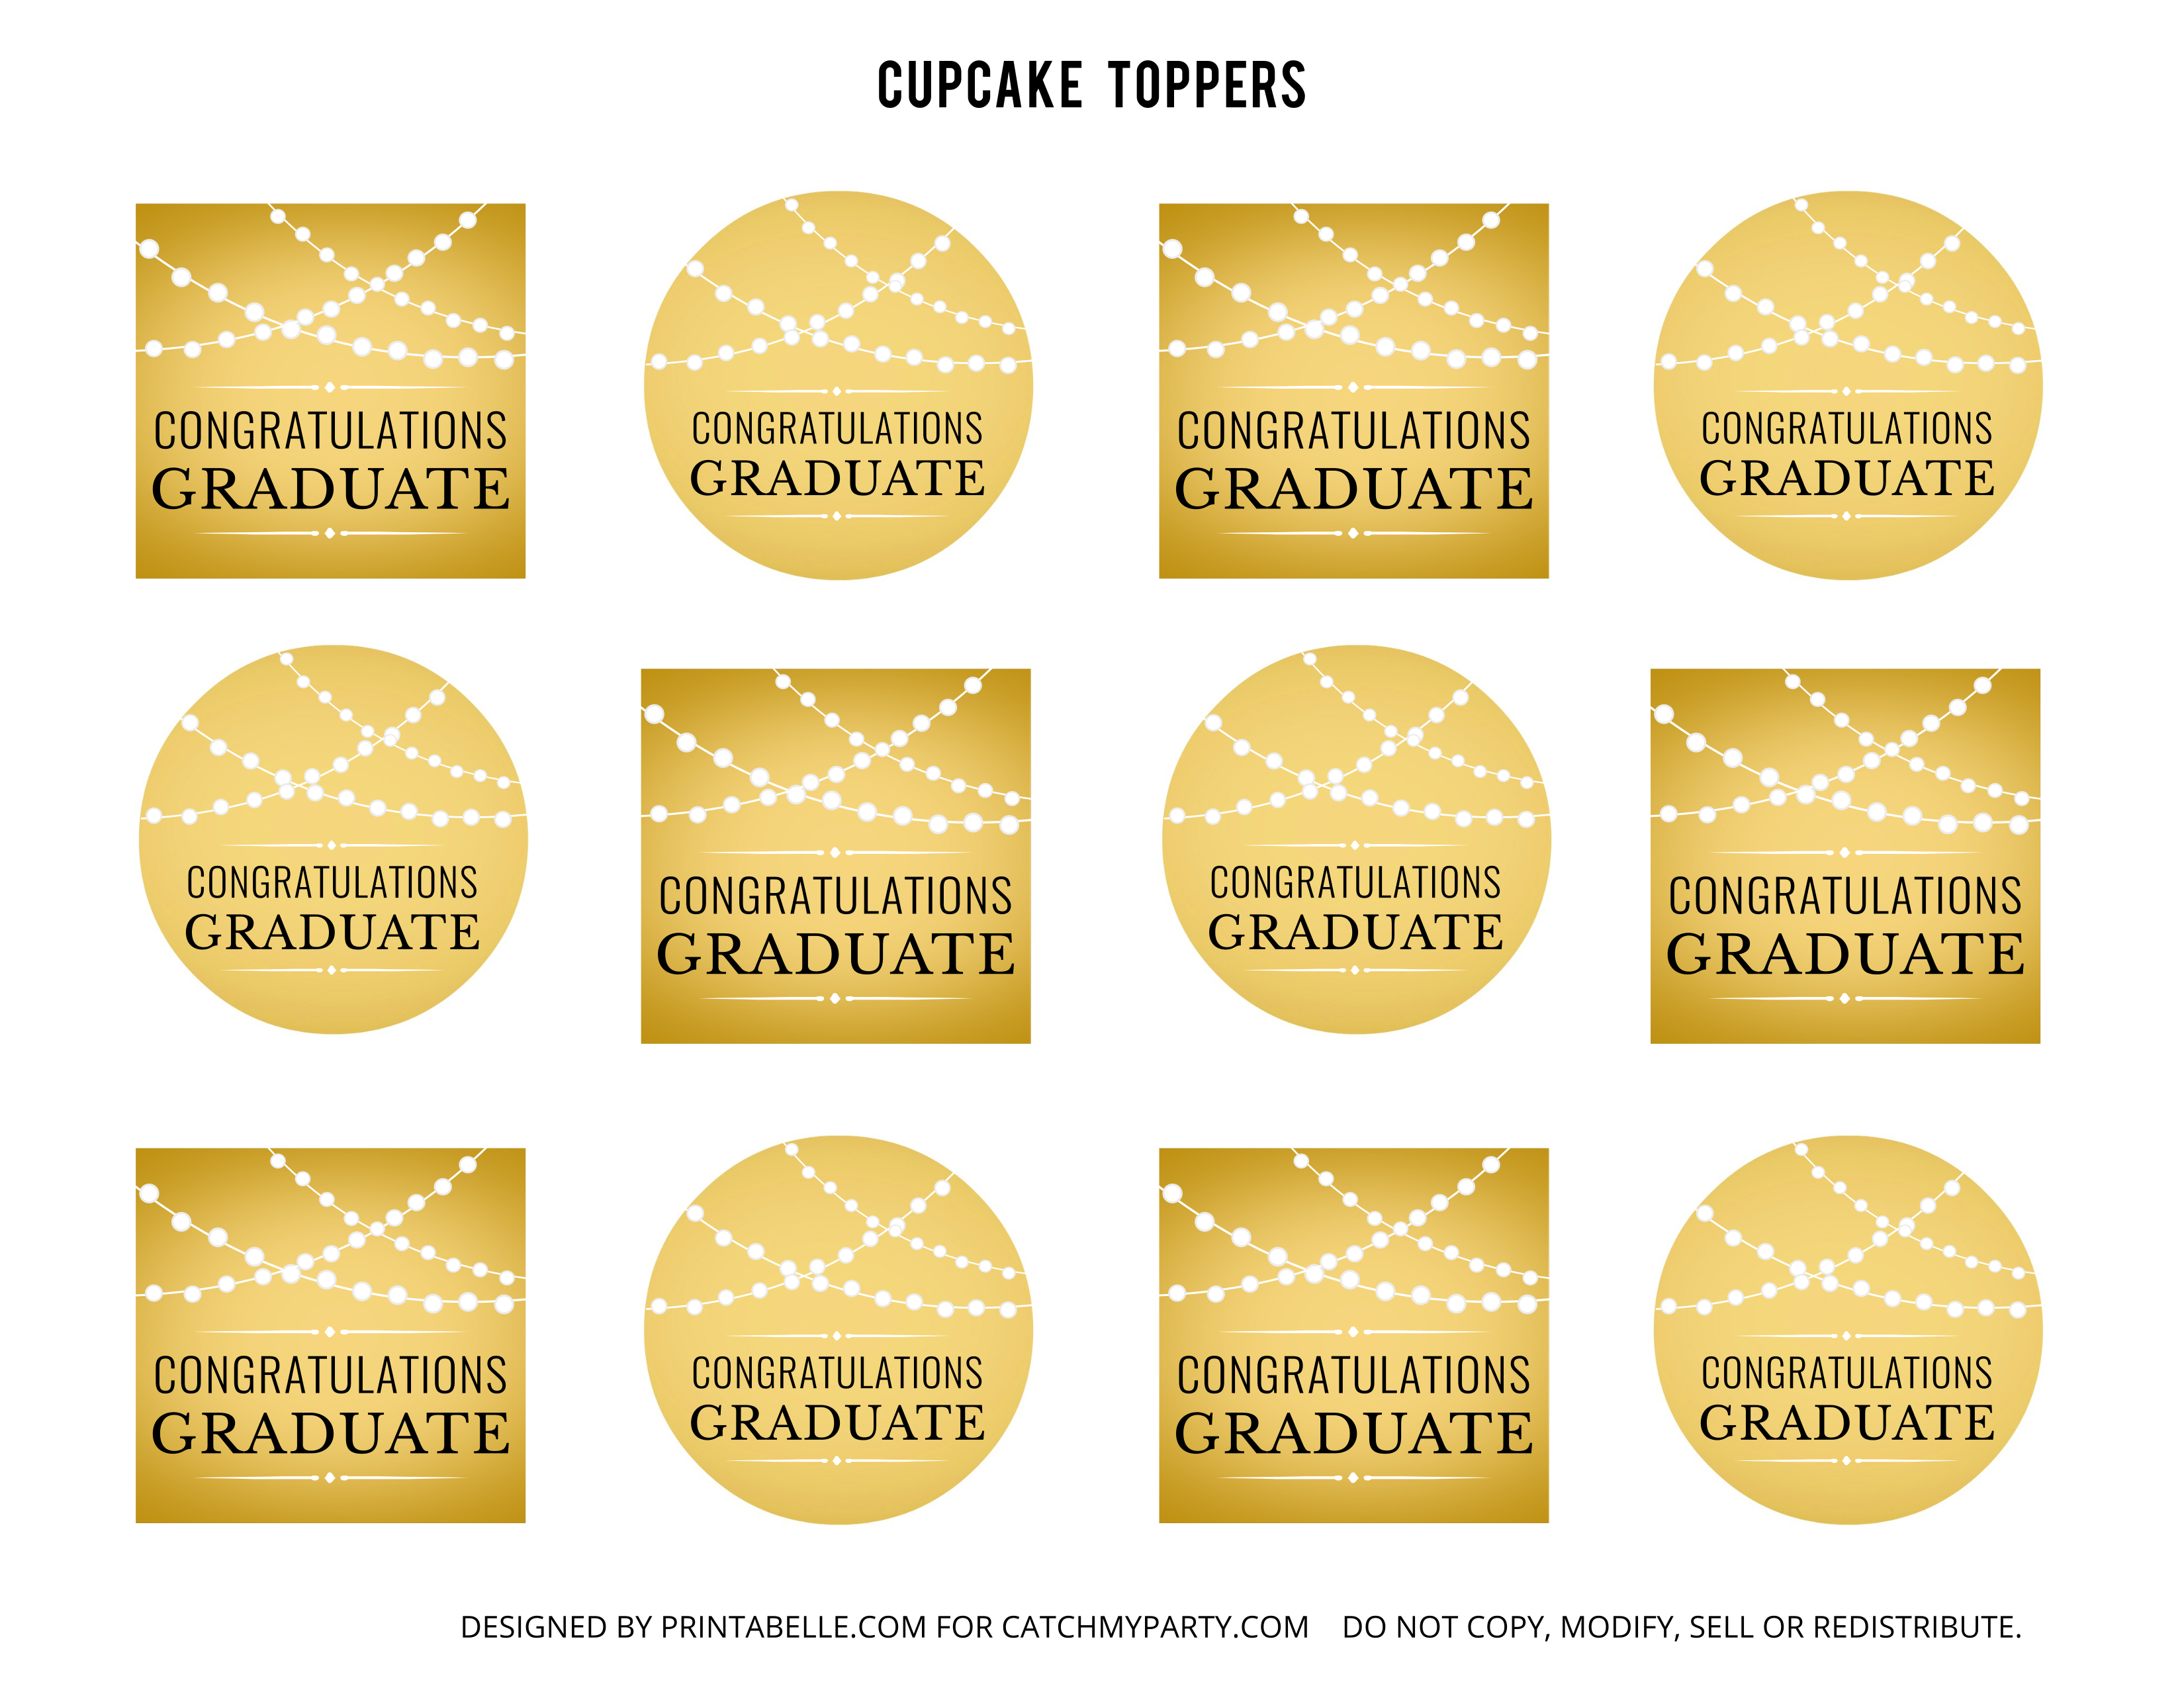 free-printable-graduation-cupcake-toppers-free-printable